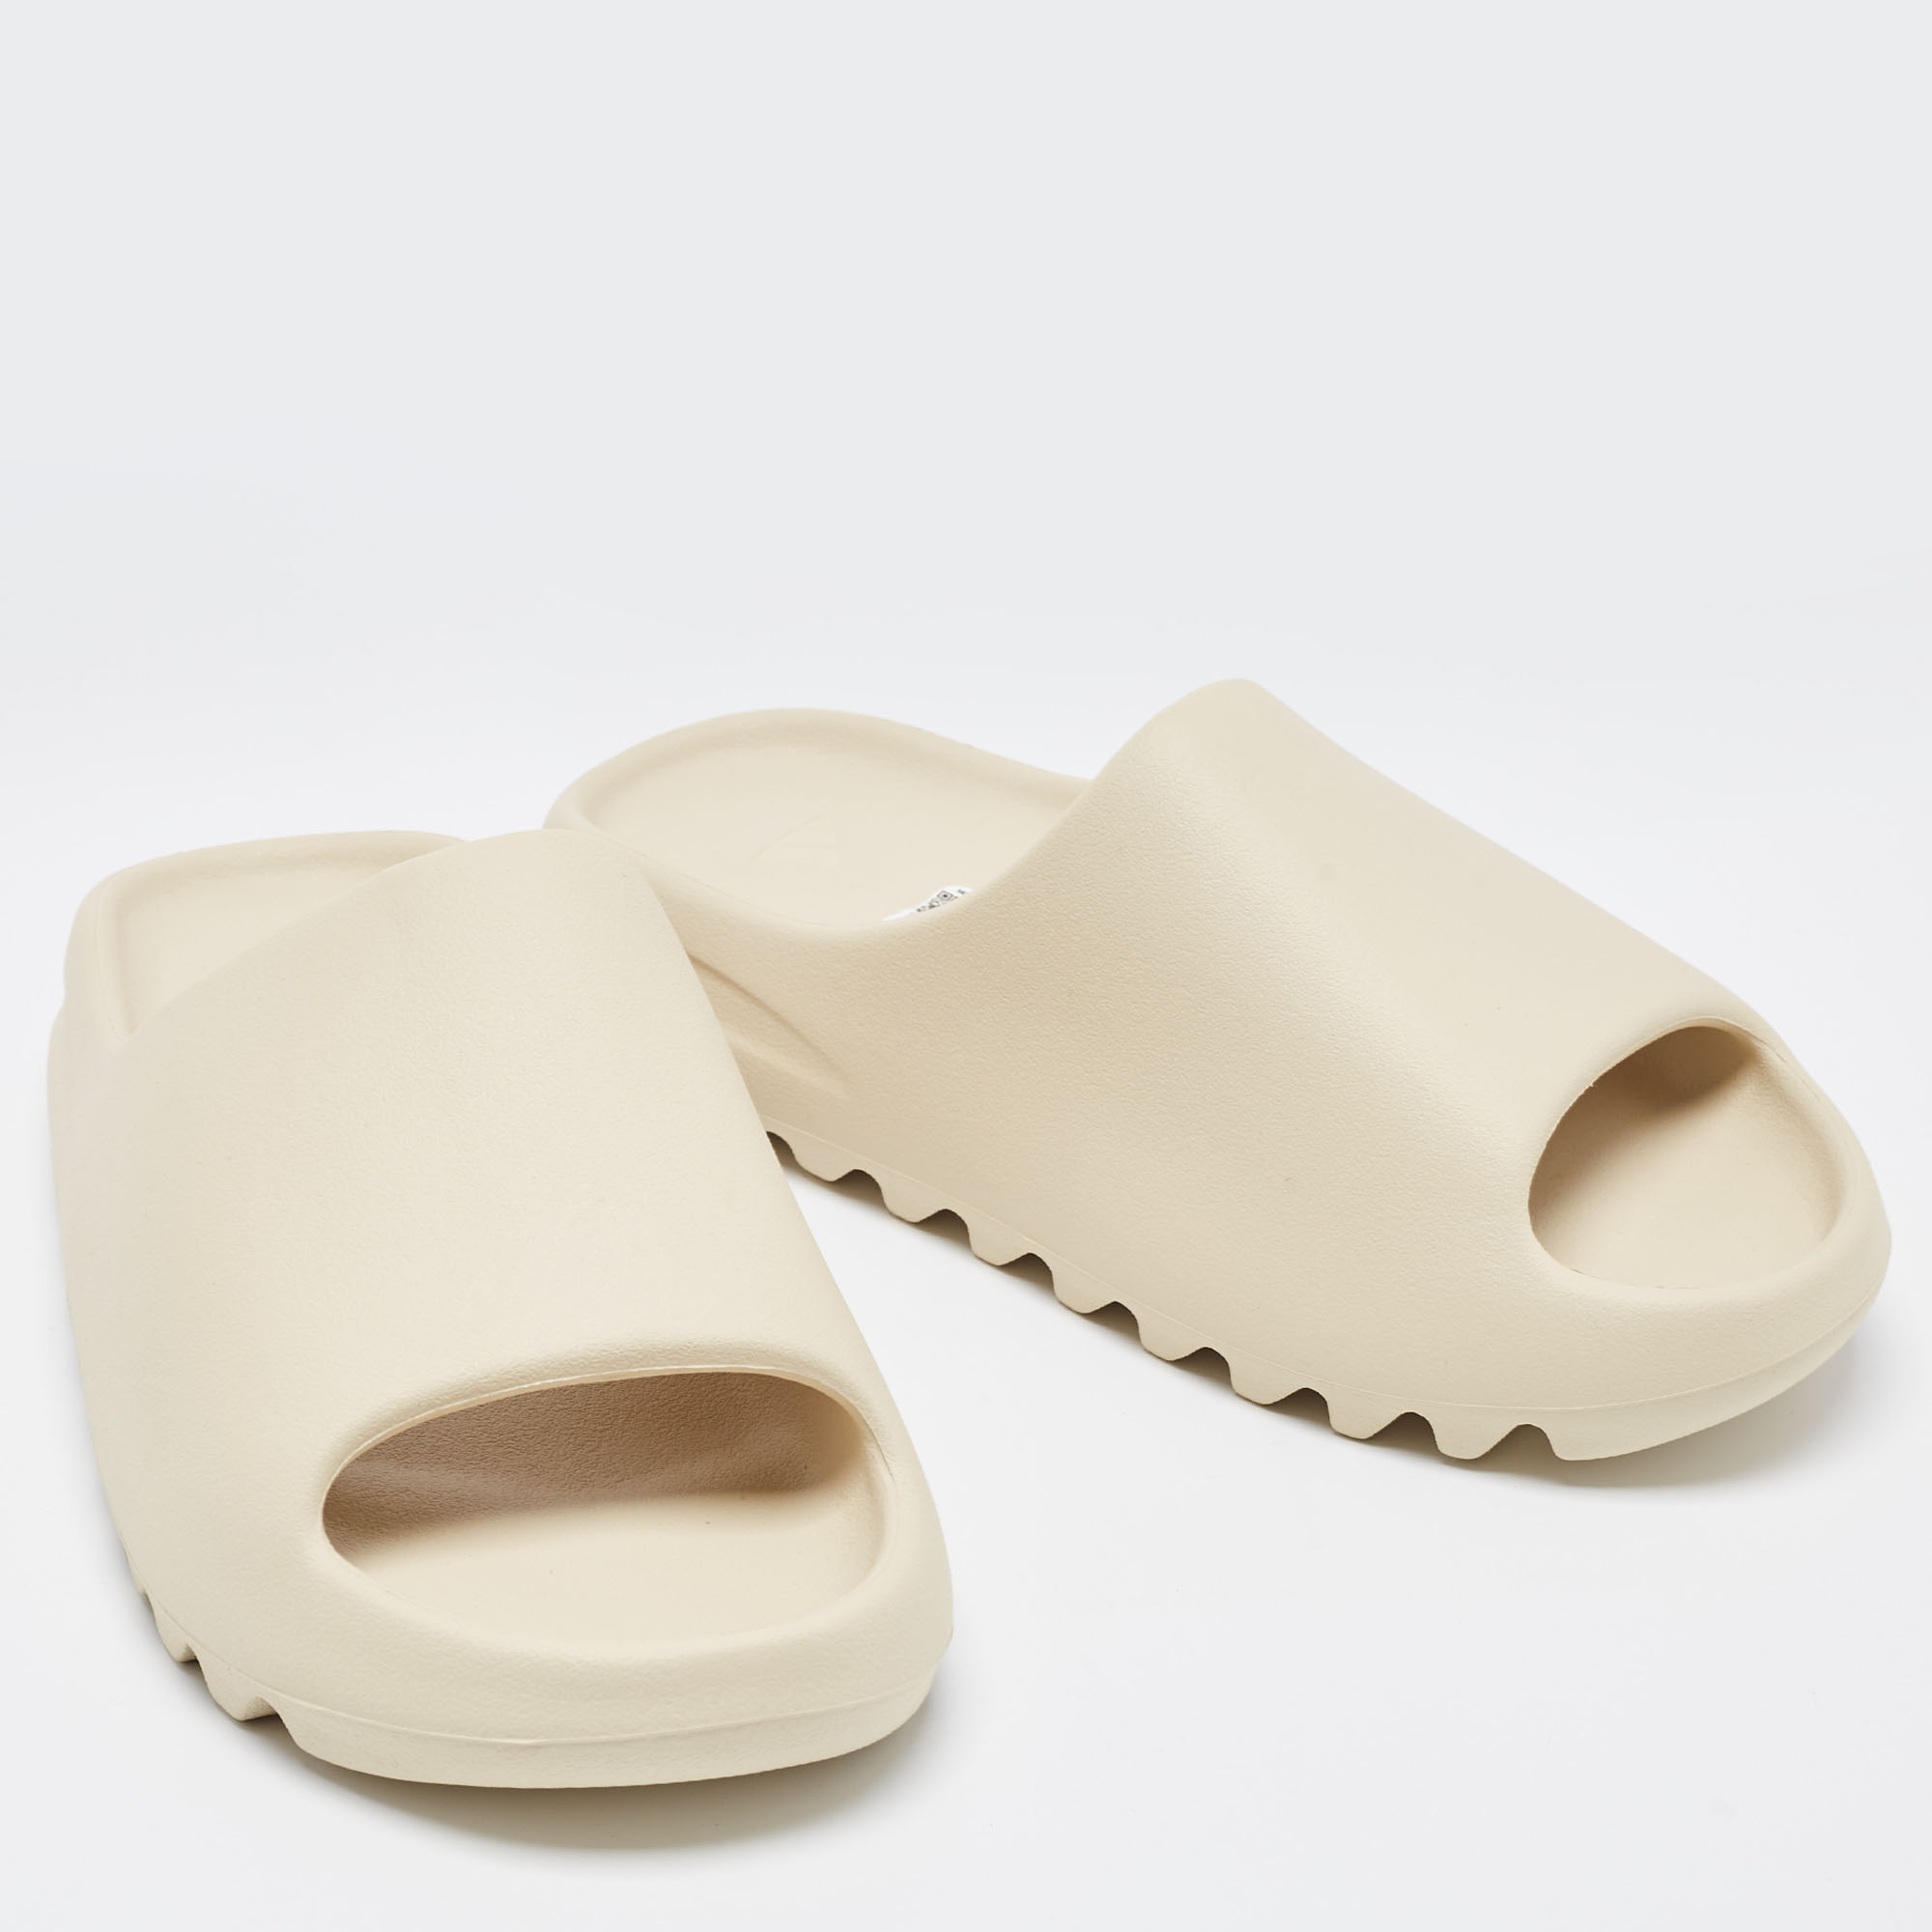 Yeezy X Adidas Cream Rubber Bone Slides Size 43